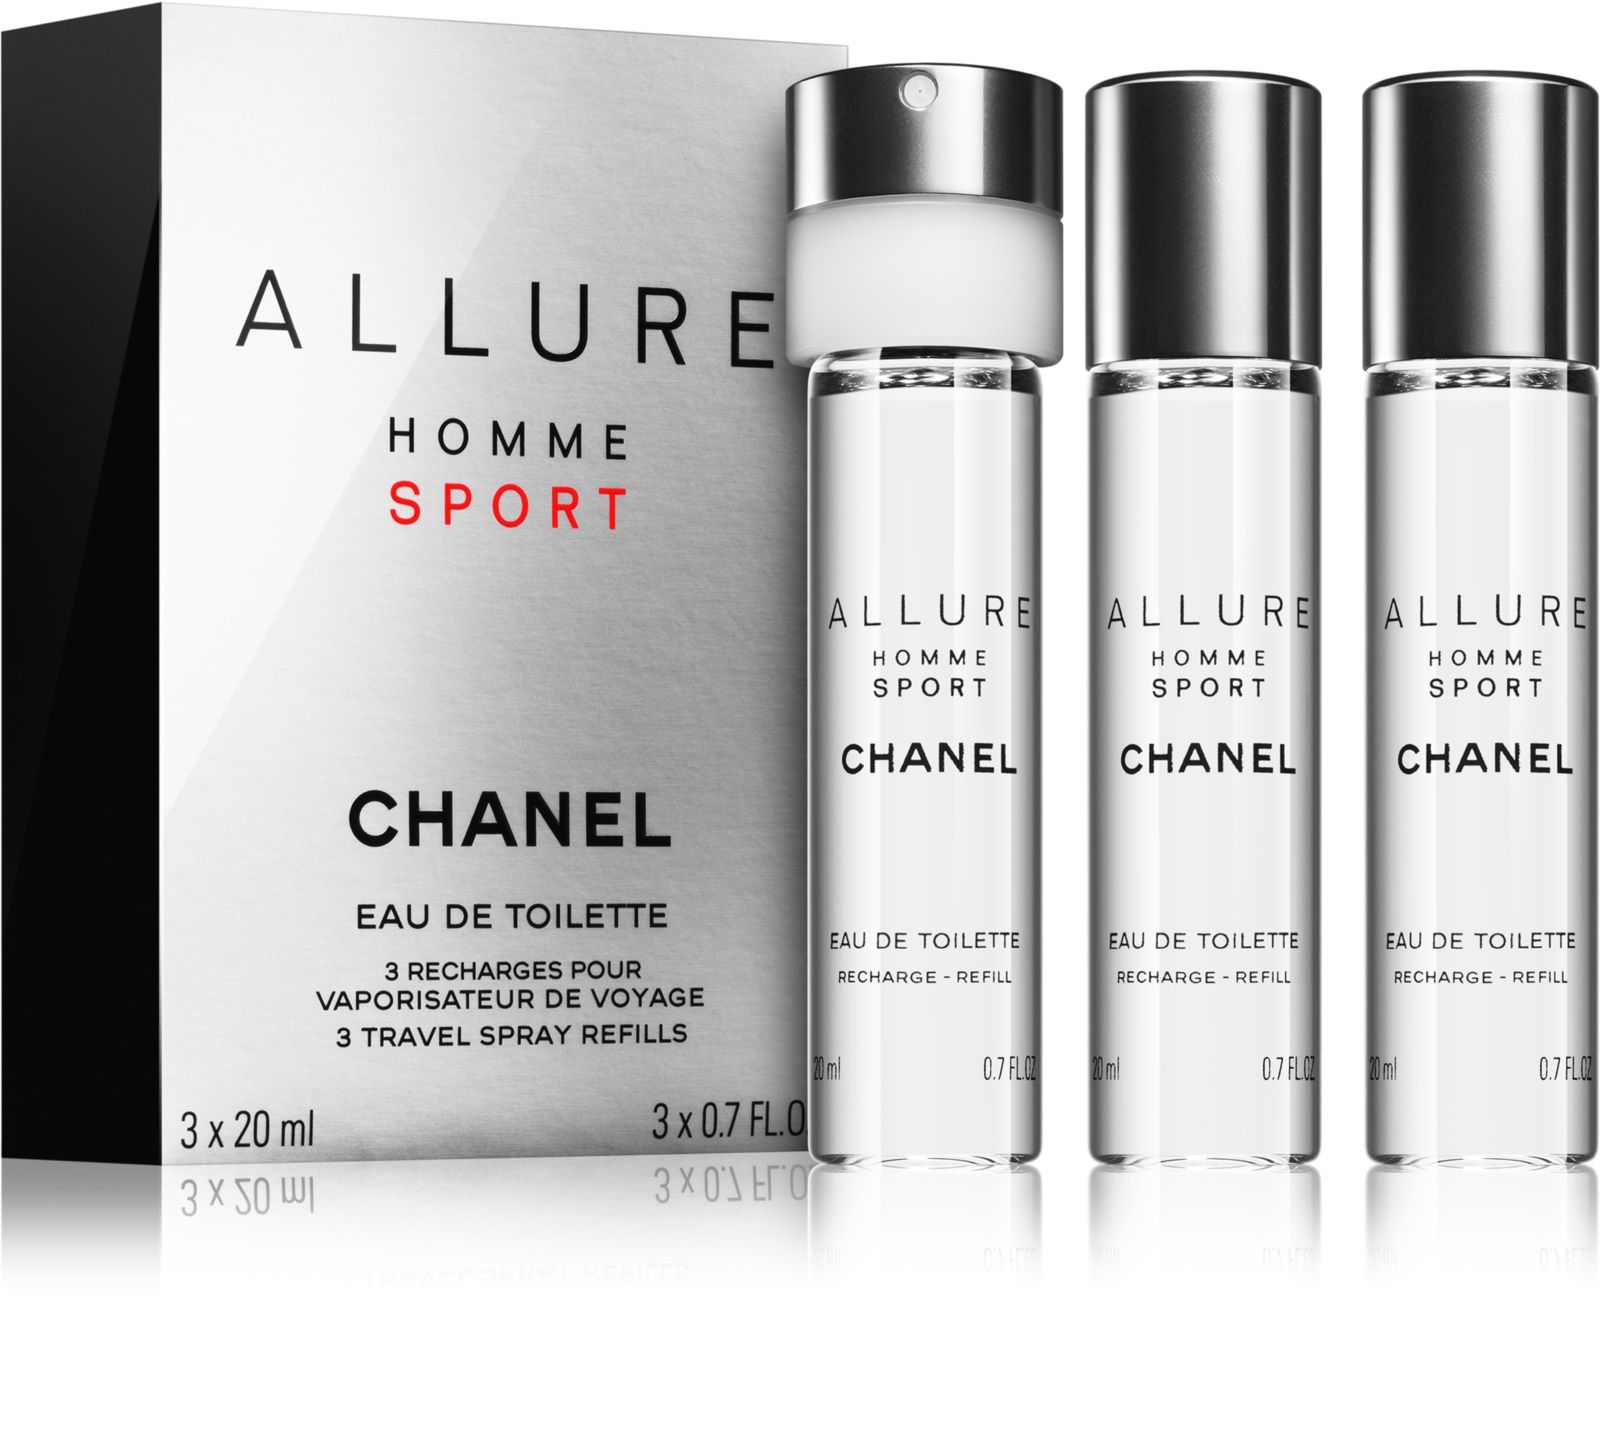 Allure homme sport eau. Шанель Allure homme Sport. Chanel Allure homme Sport. Chanel Allure Sport. Chanel Allure homme Sport мужские.